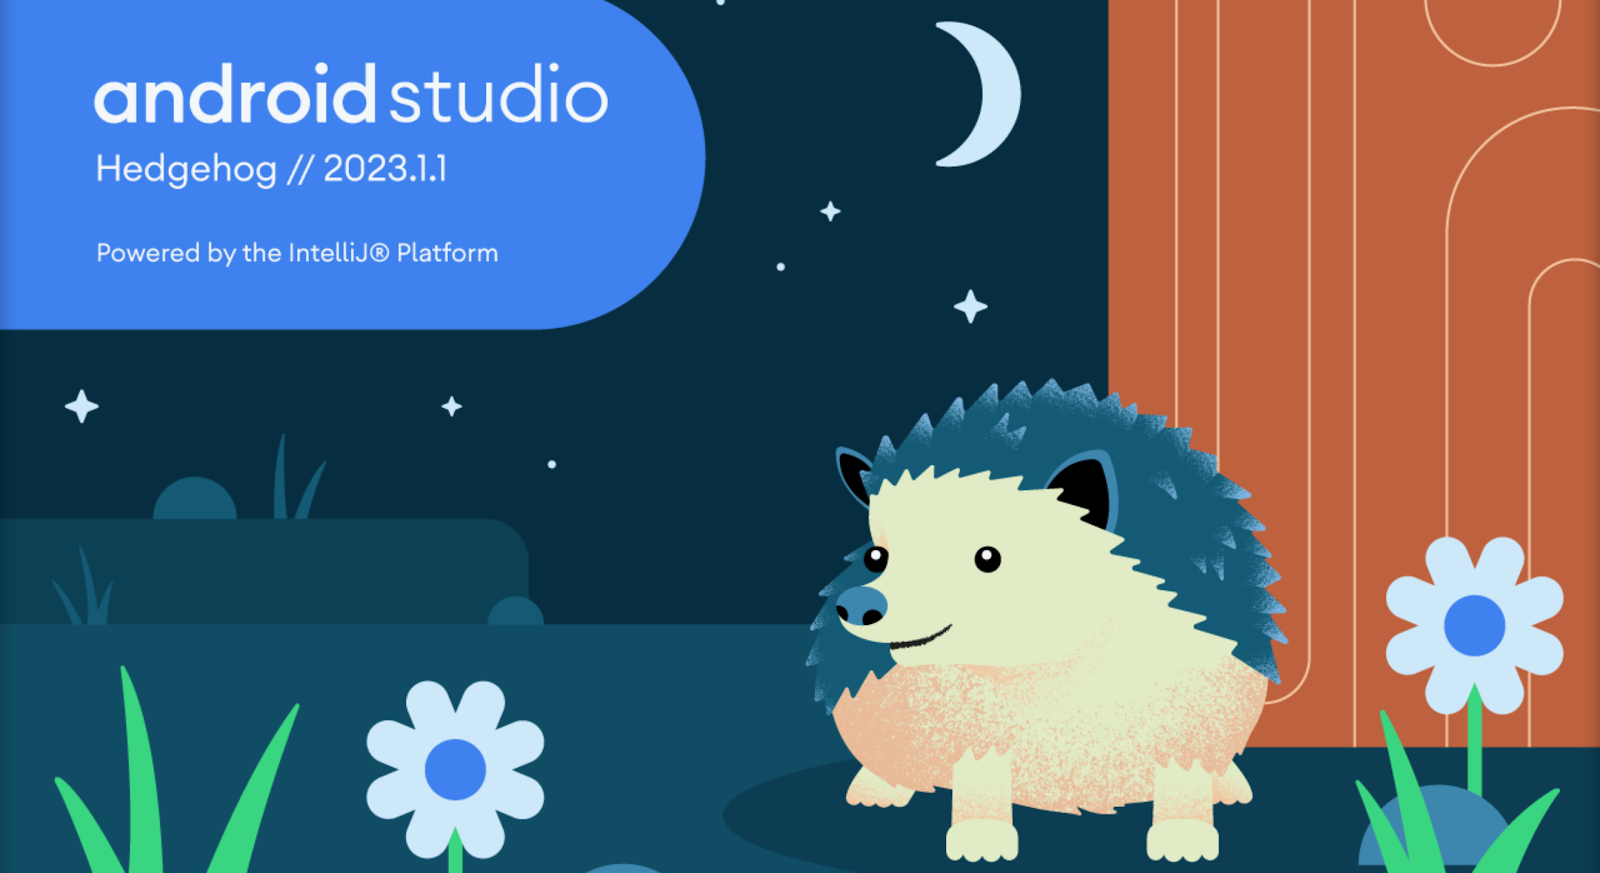 Android Studio Hedgehog is steady